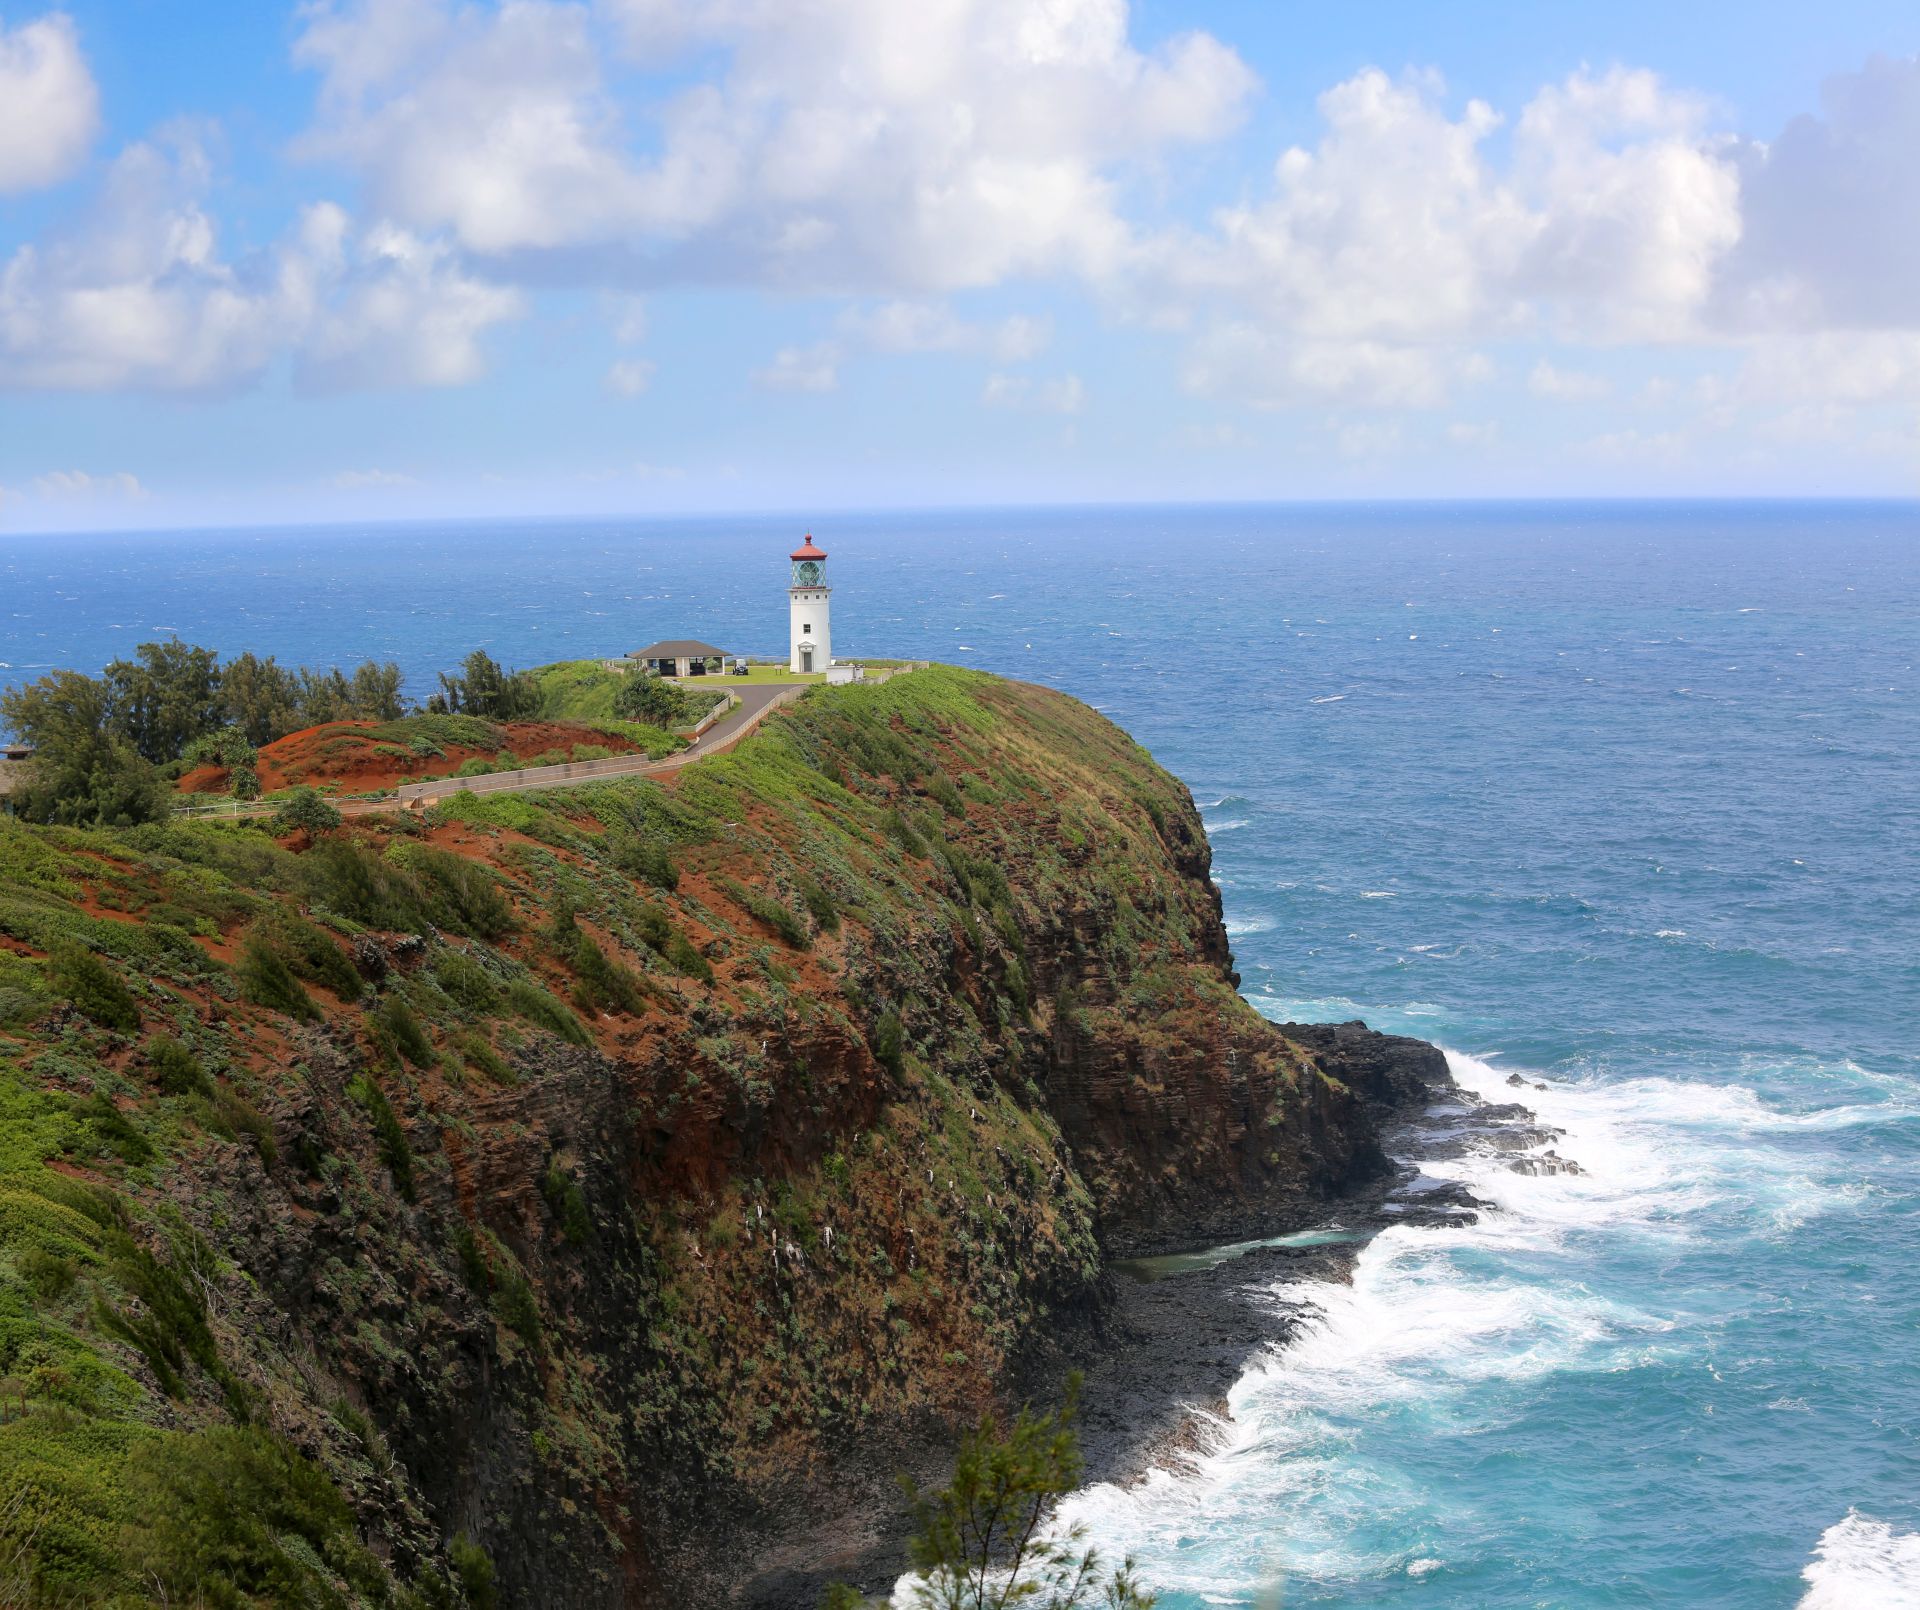 The lighthouse of the KAUAI, Hawaii